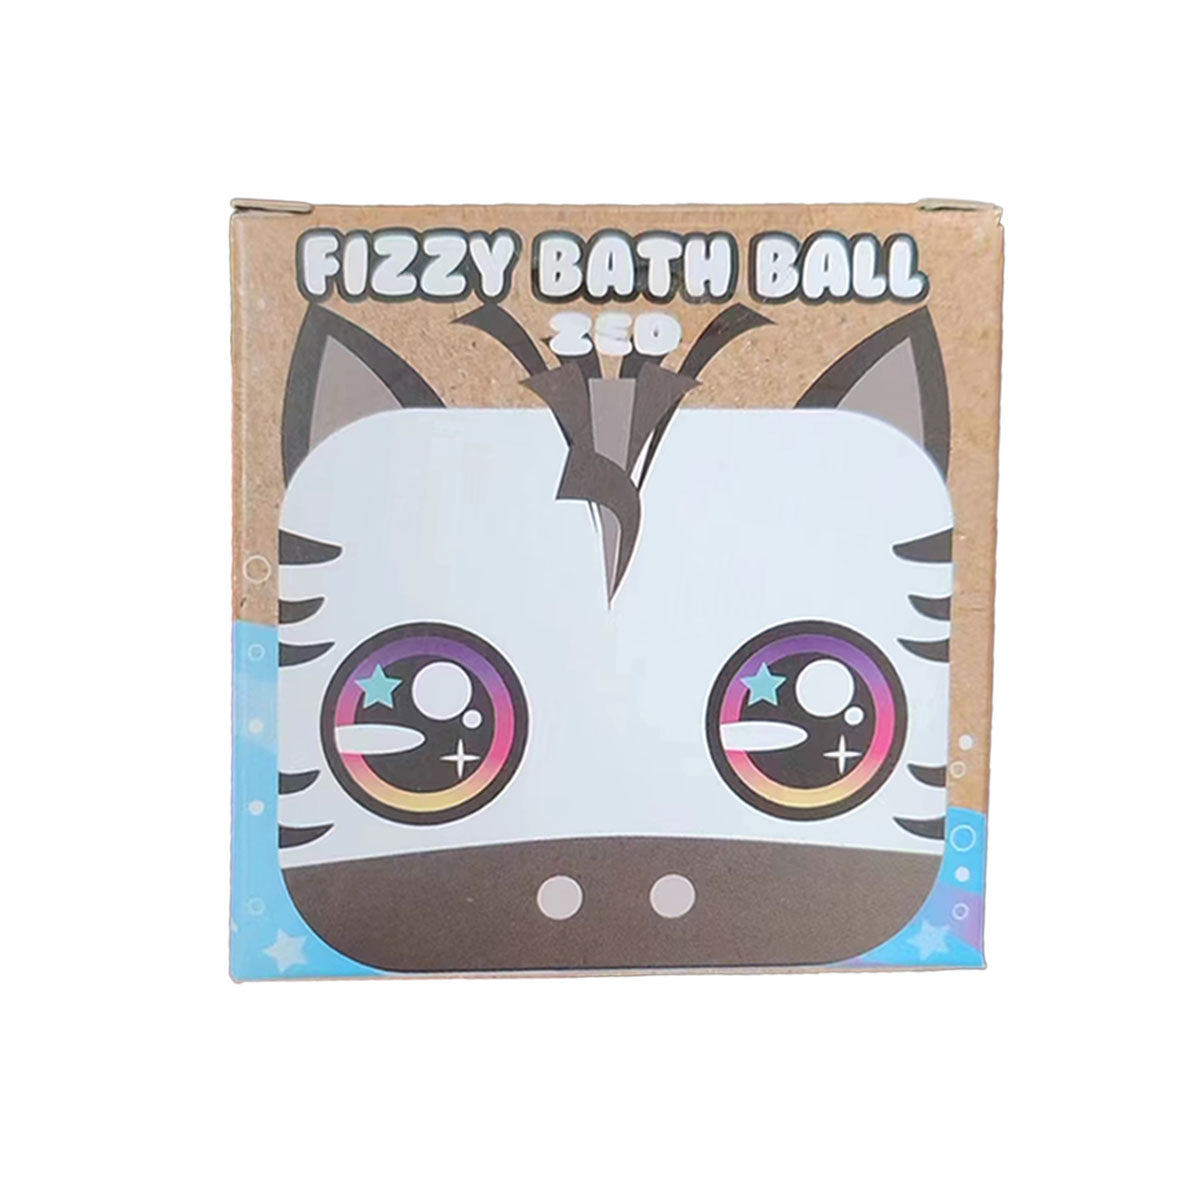 Sudprize Fizzy Bath Ball Zed Flower Power